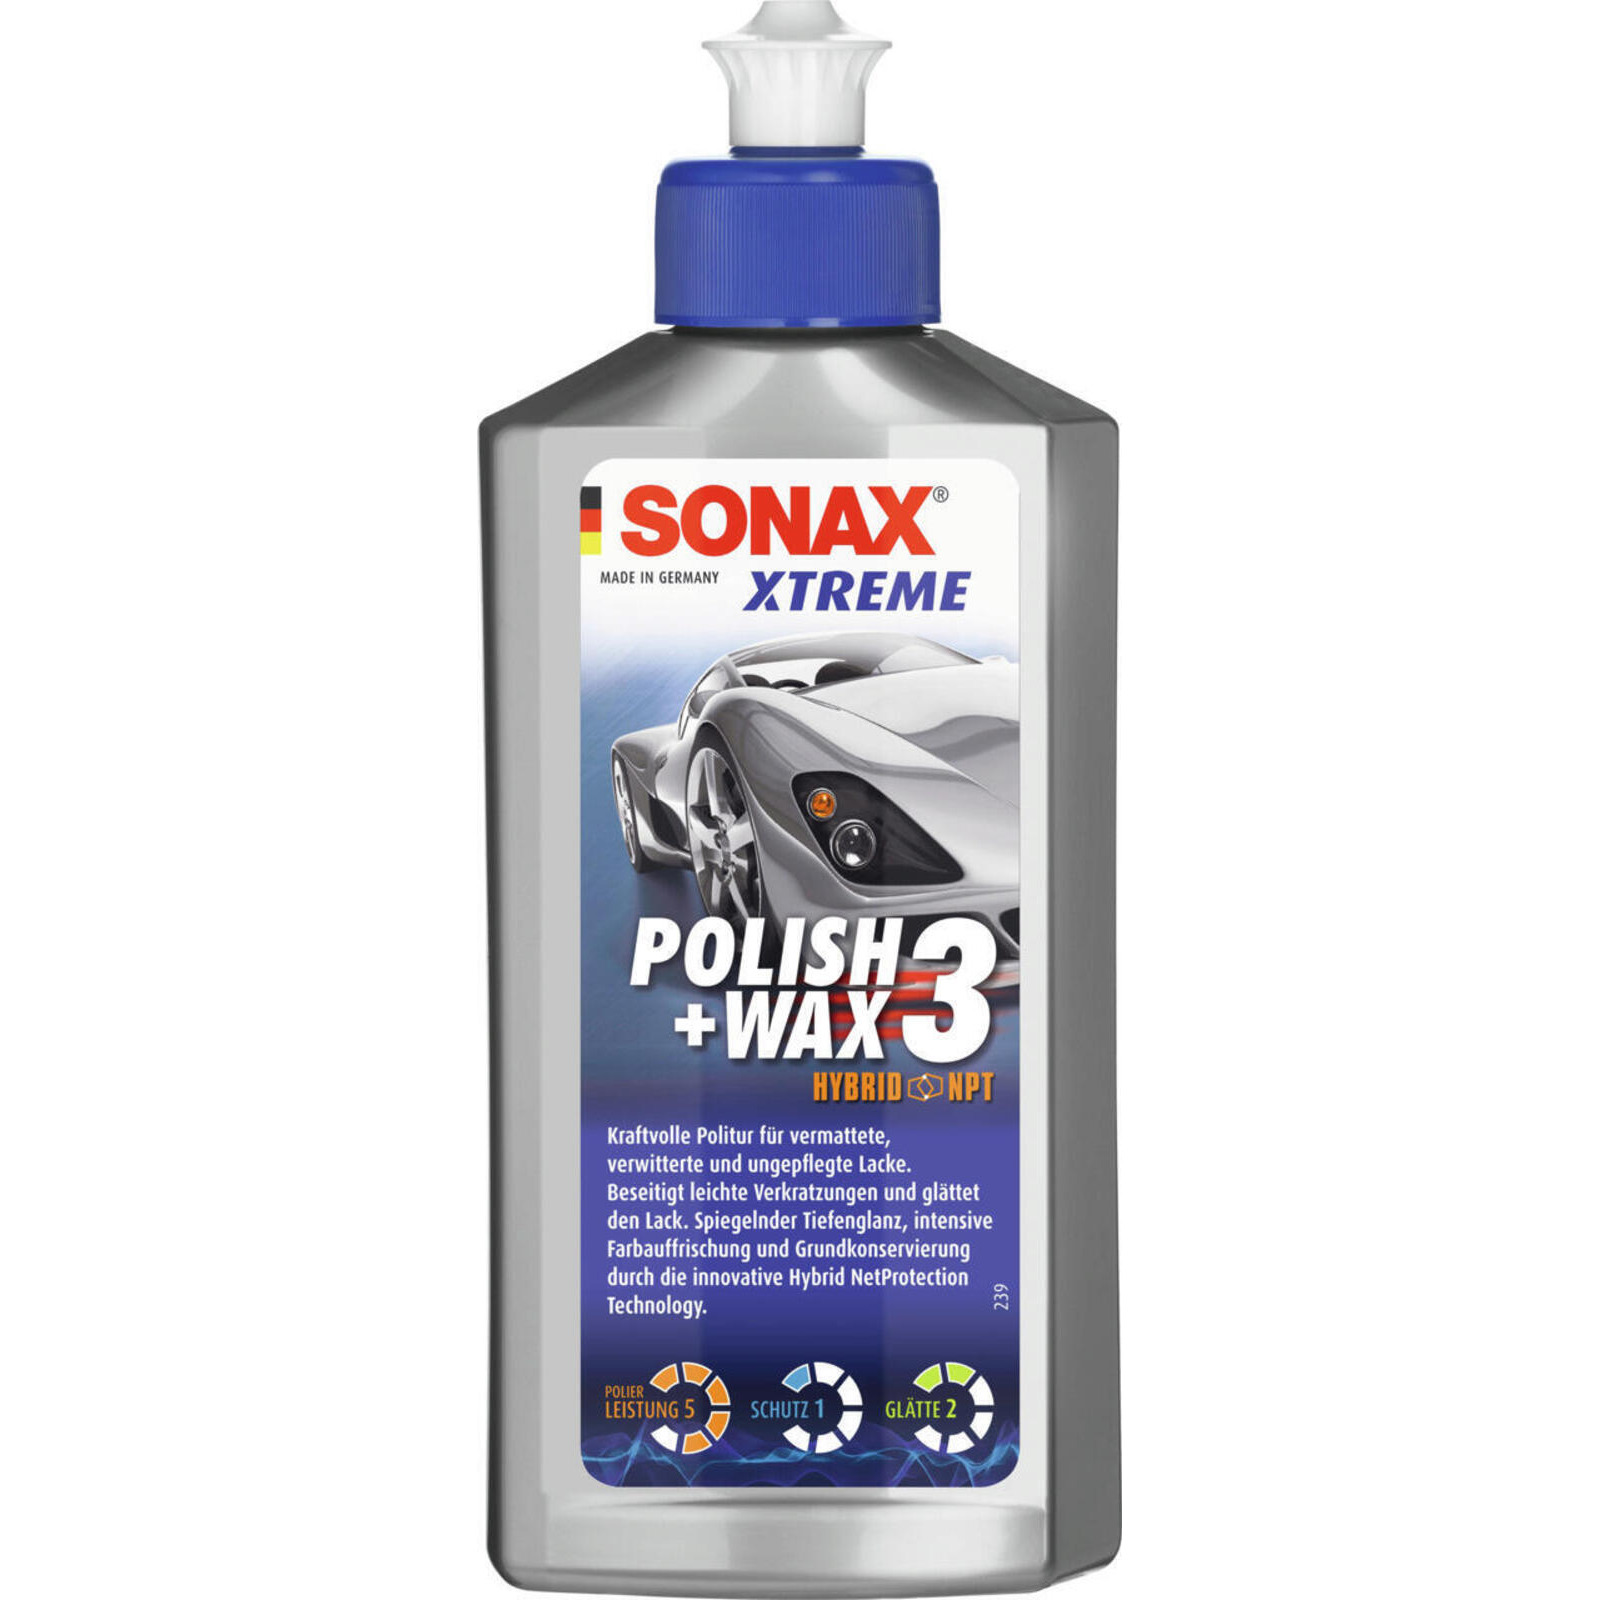 SONAX Polish Xtreme Polish+Wax 3